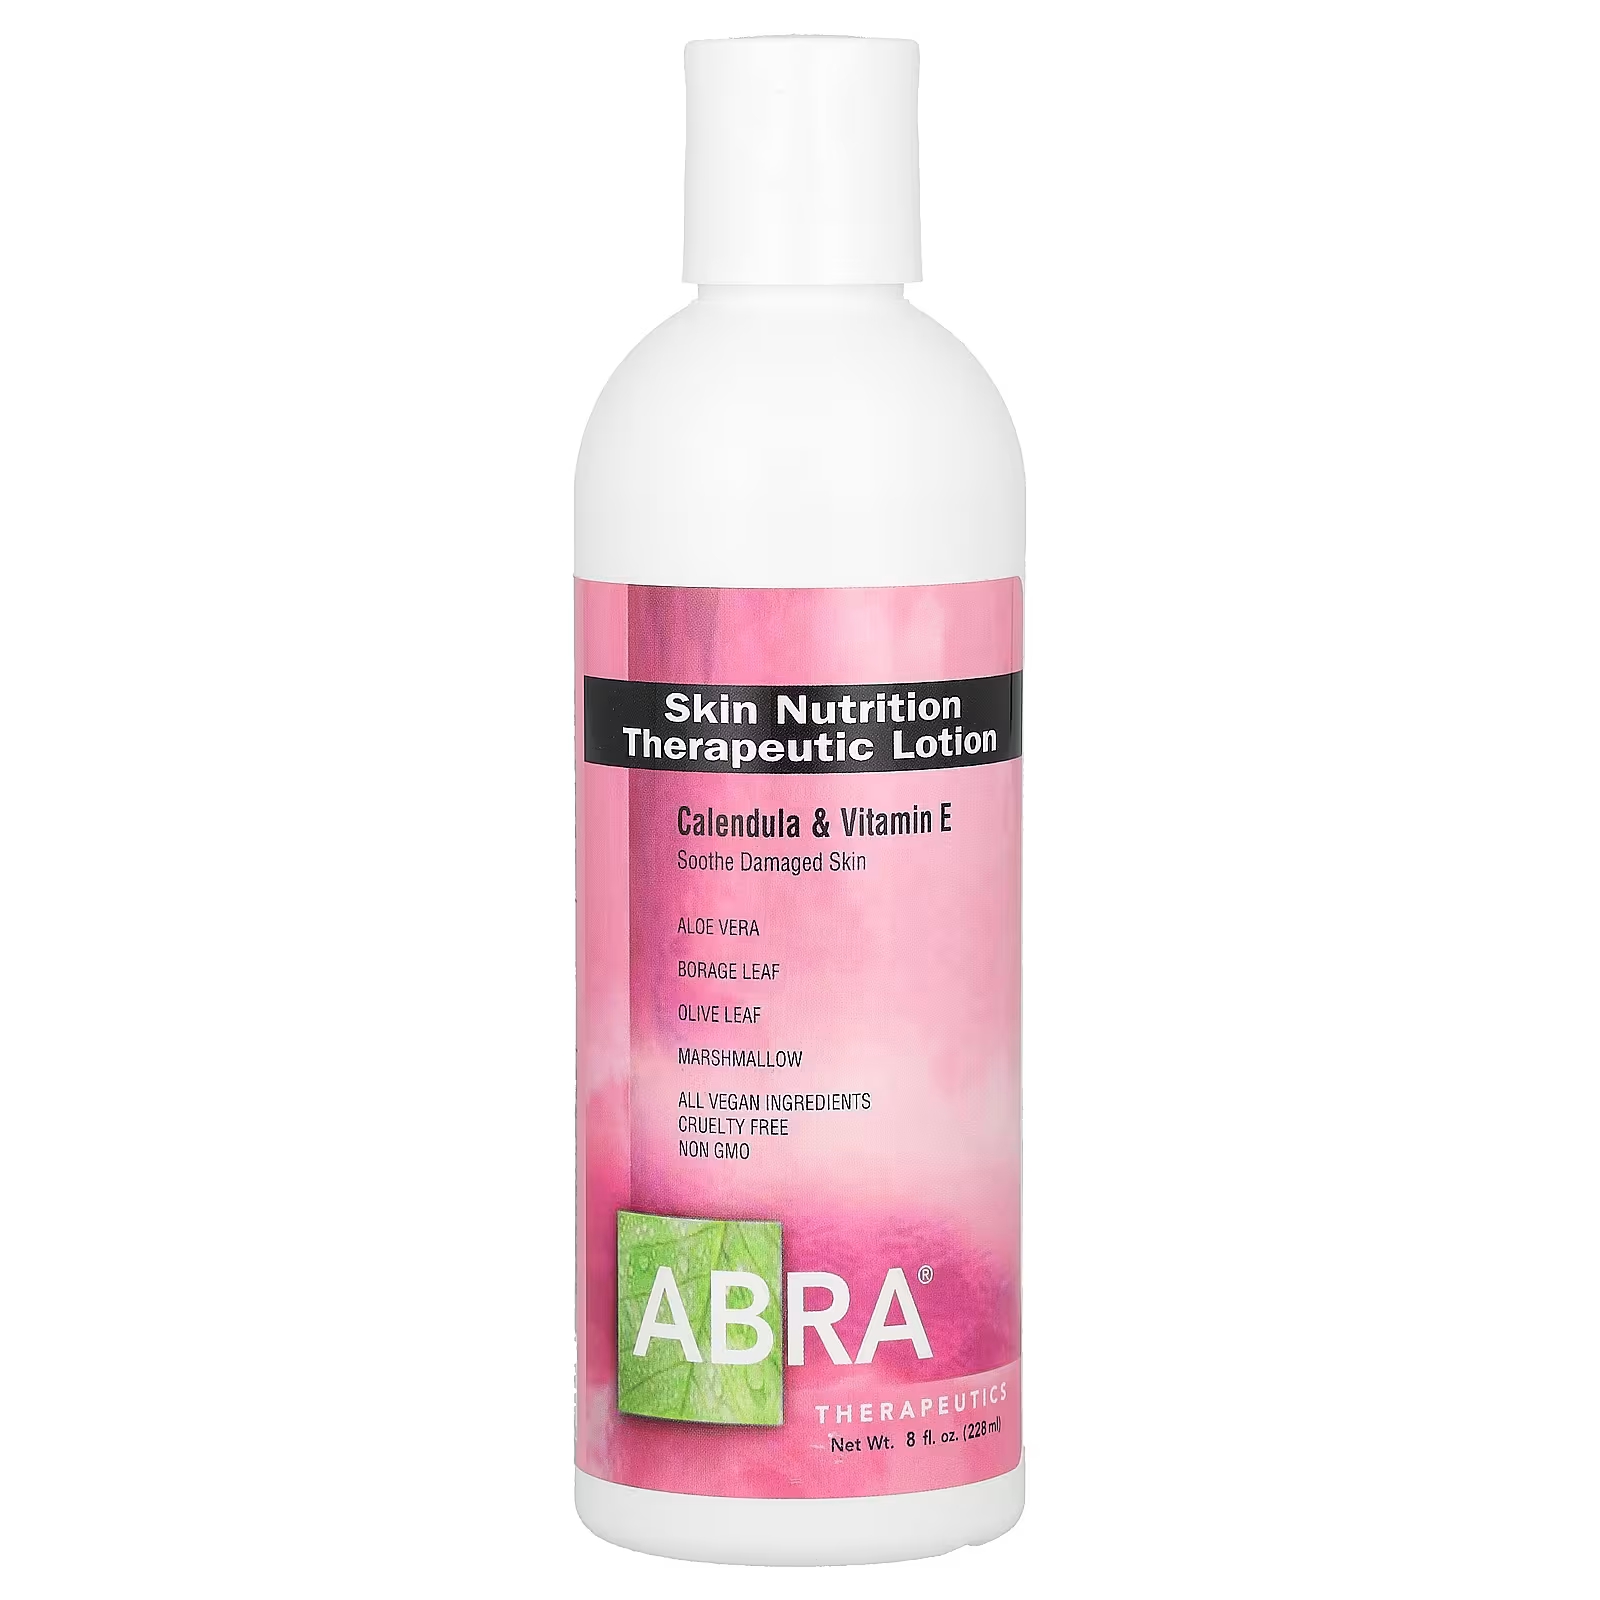 Abracadabra Abra Therapeutics Skin Nutrition Терапевтический лосьон, 8 жидких унций (228 мл) Abracadabra, Abra Therapeutics